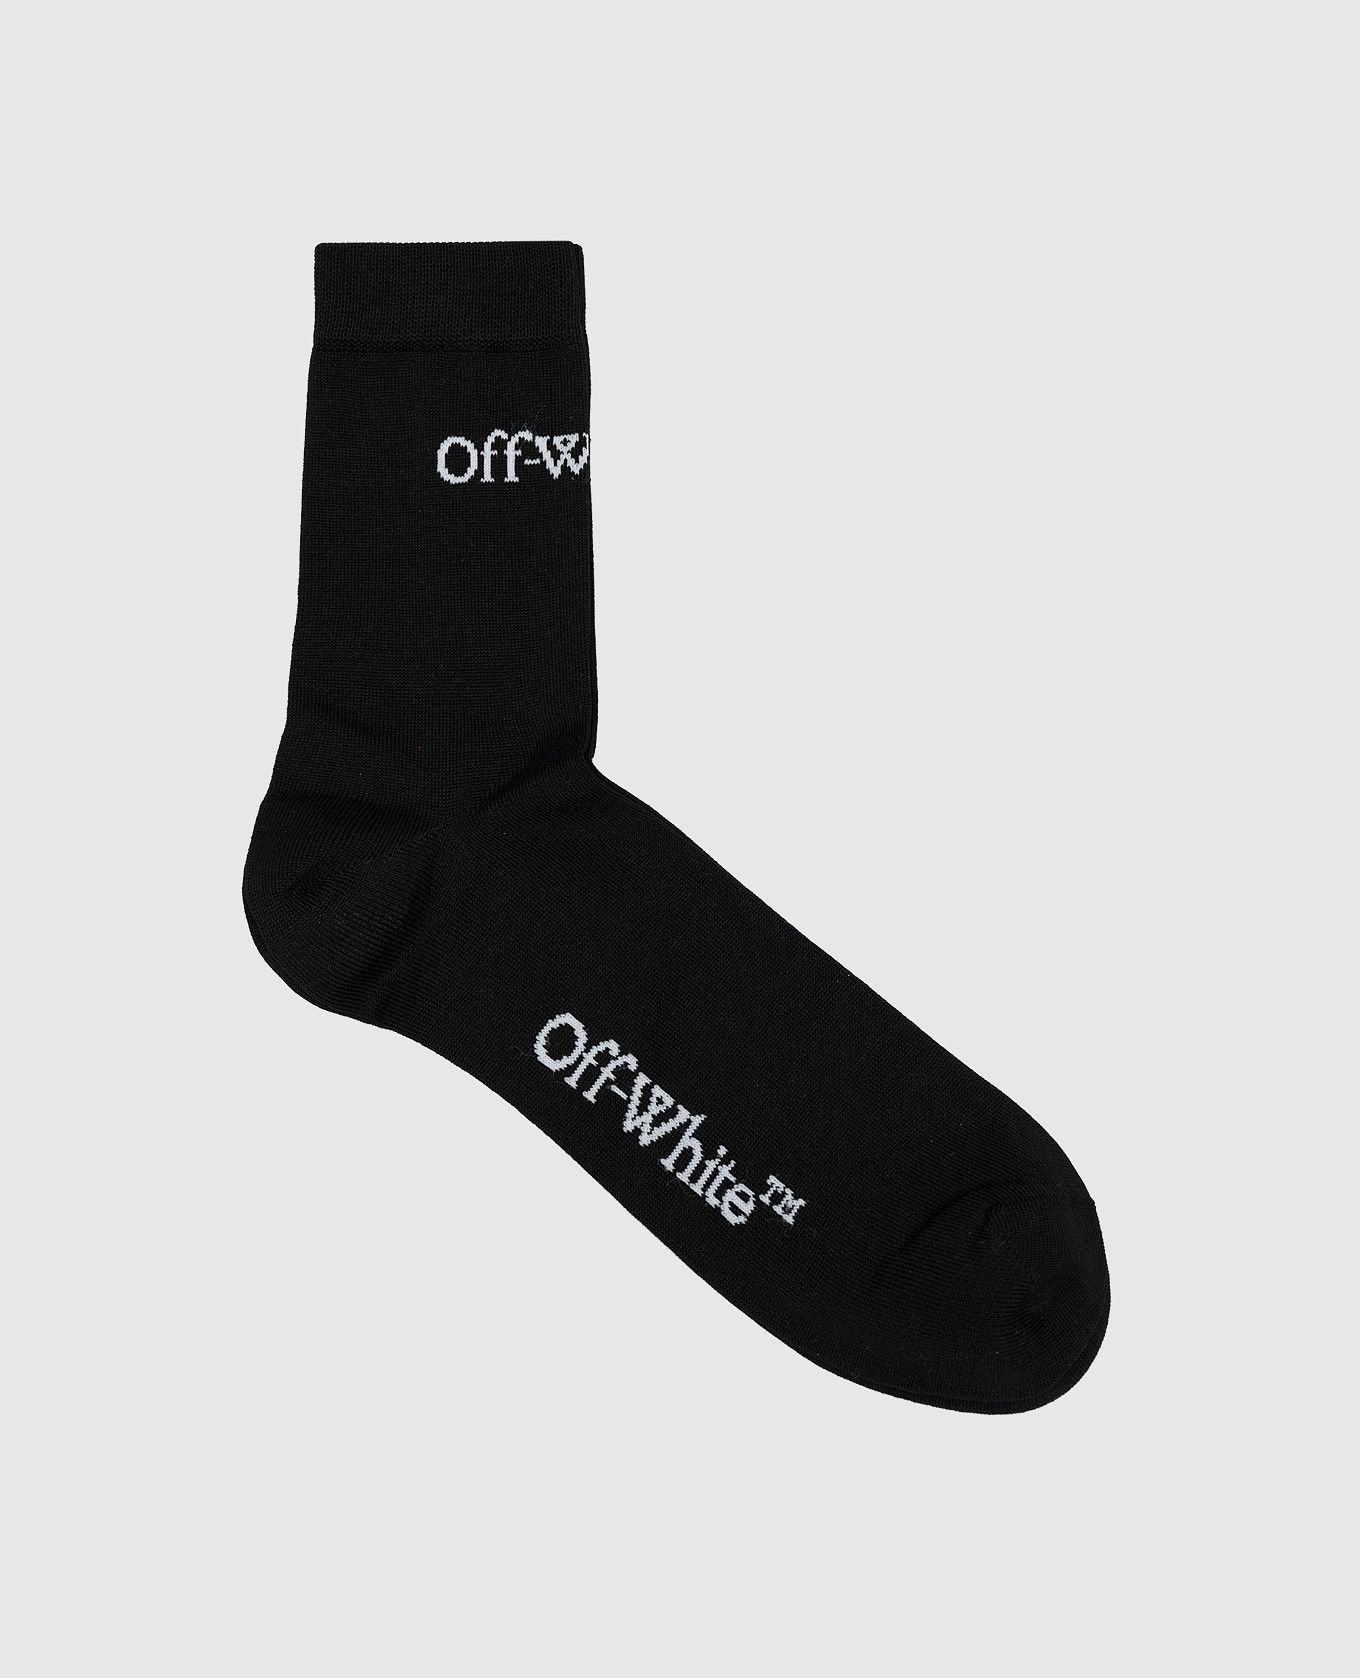 Black socks with contrasting logo pattern